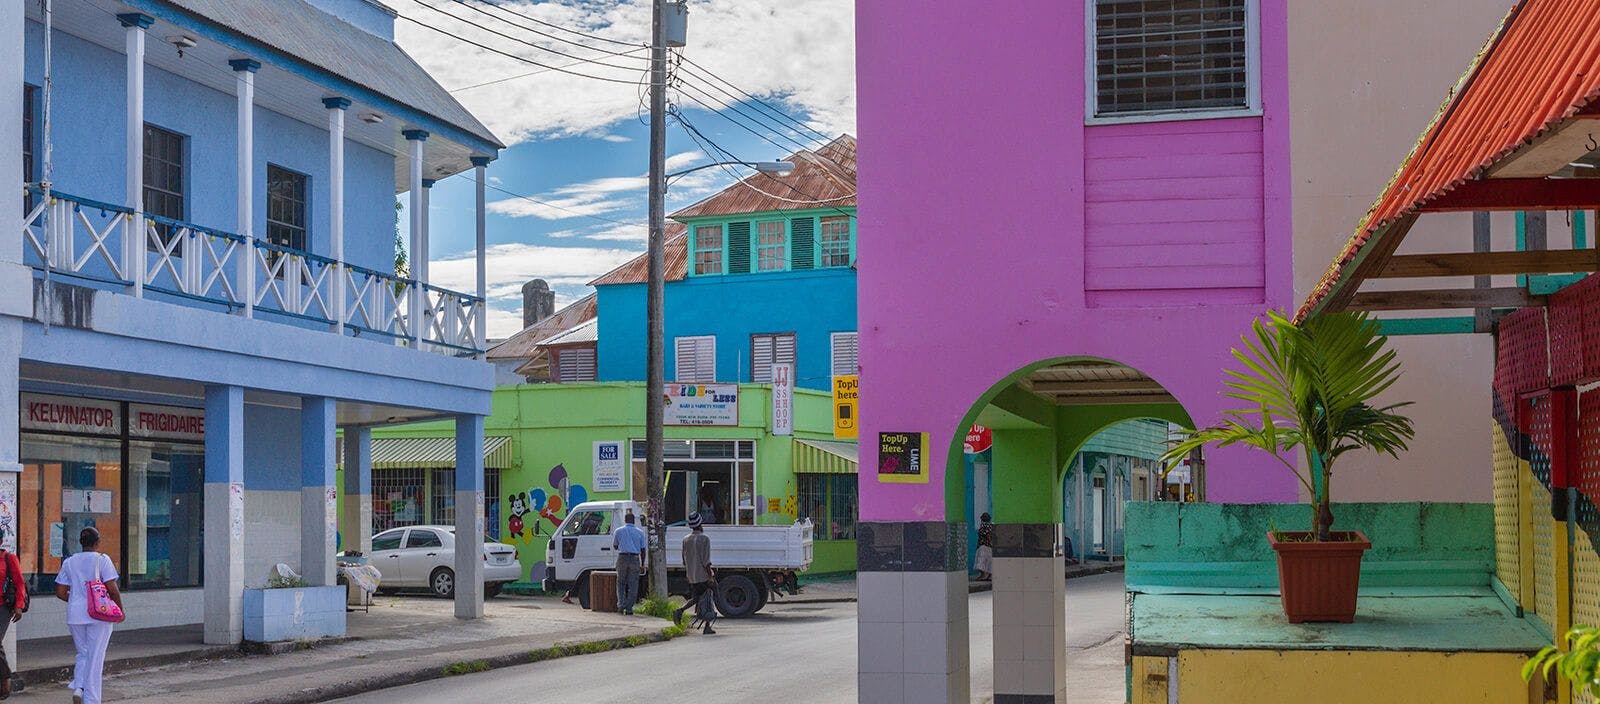 Colorful buildings in Speightstown Barbados